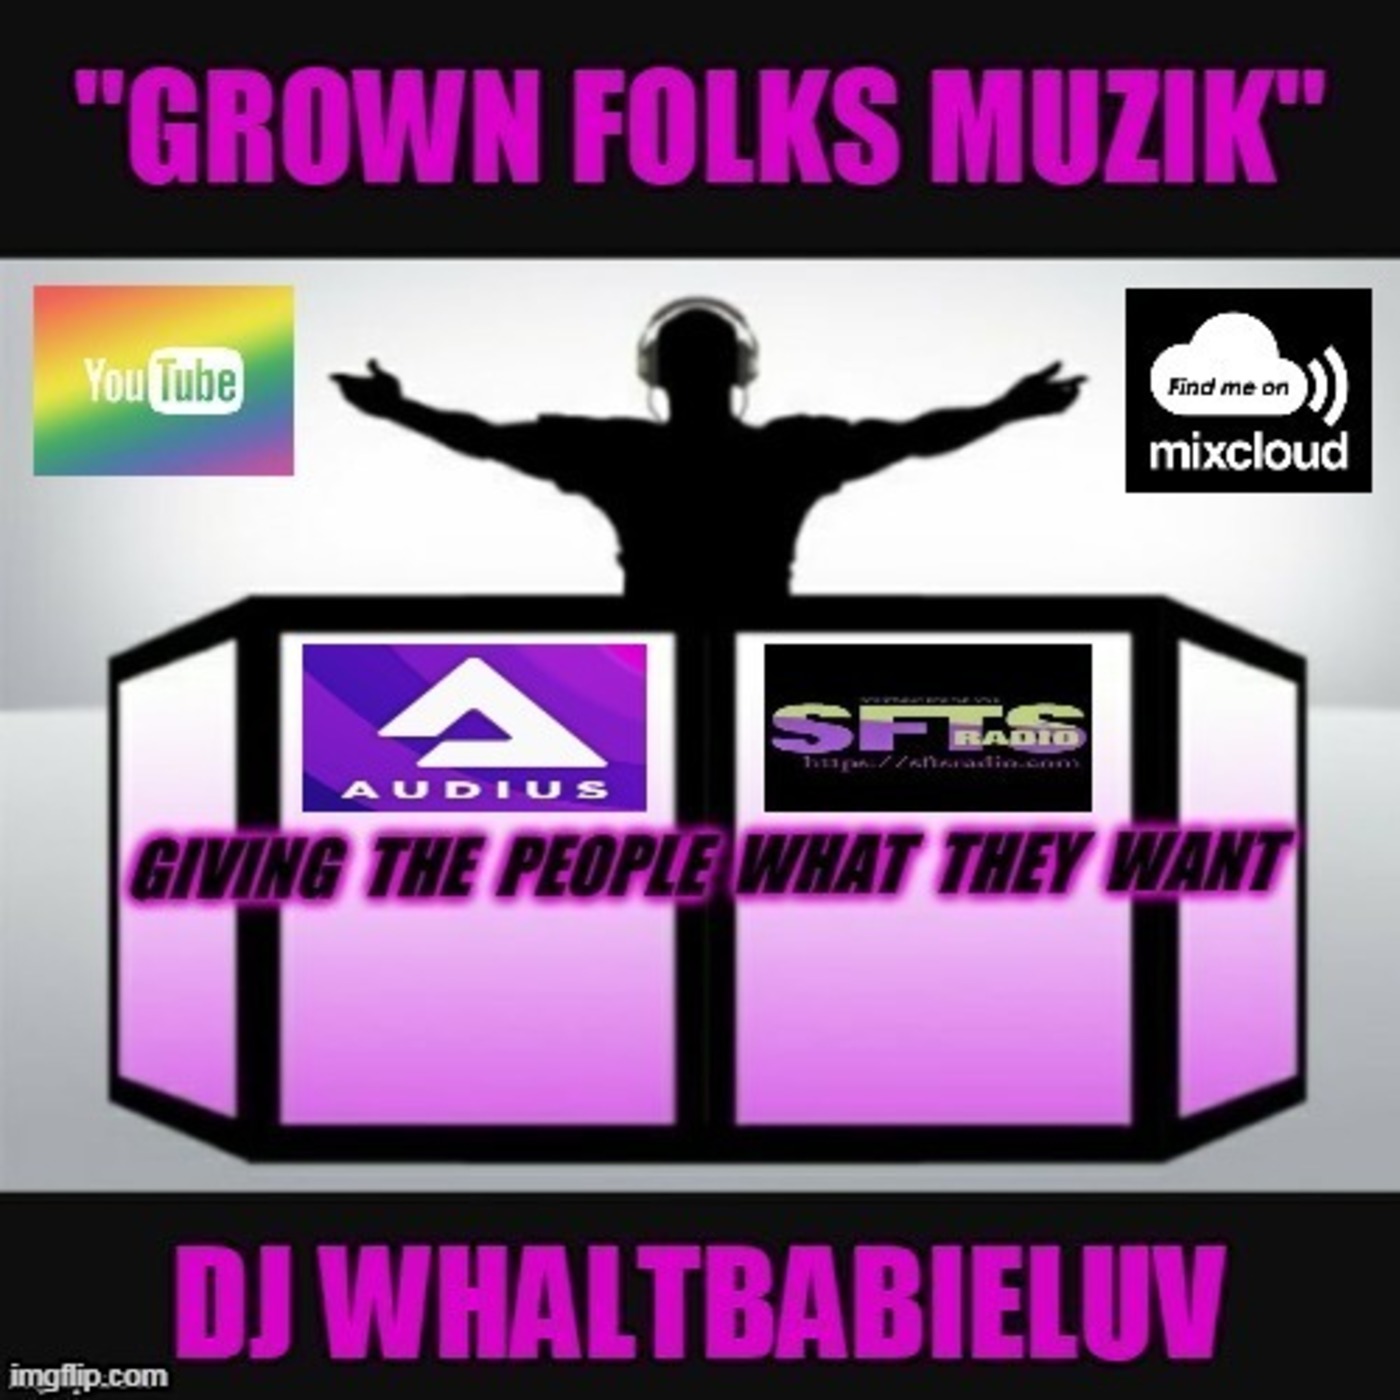 Dj WhaltBabieLuv's "Grown Folks Muzik"